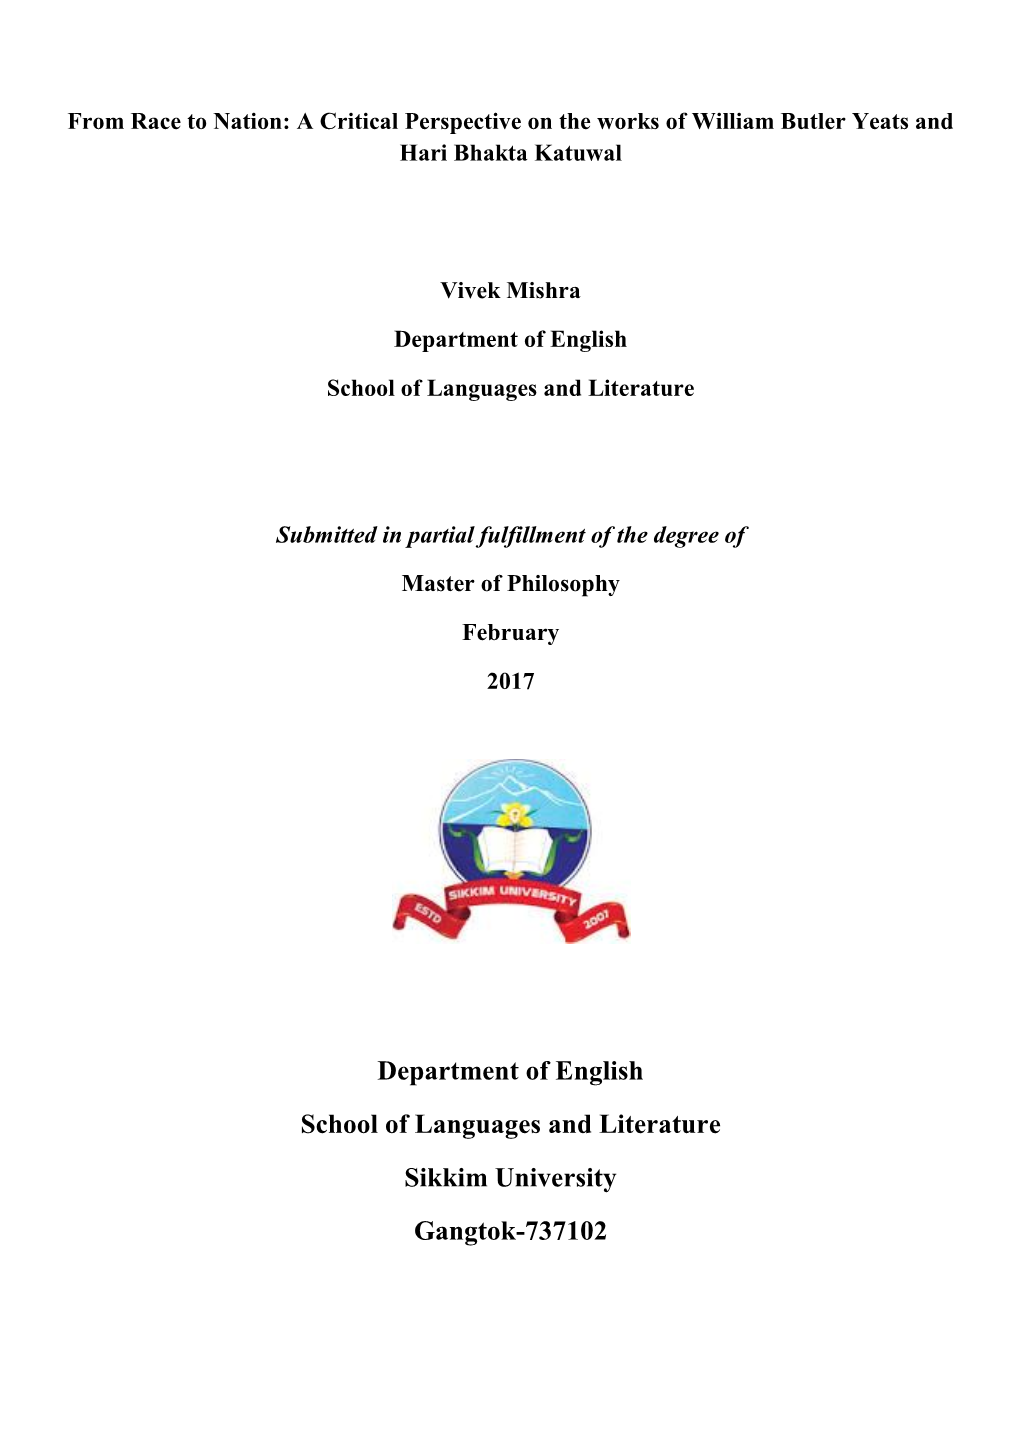 Department of English School of Languages and Literature Sikkim University Gangtok-737102